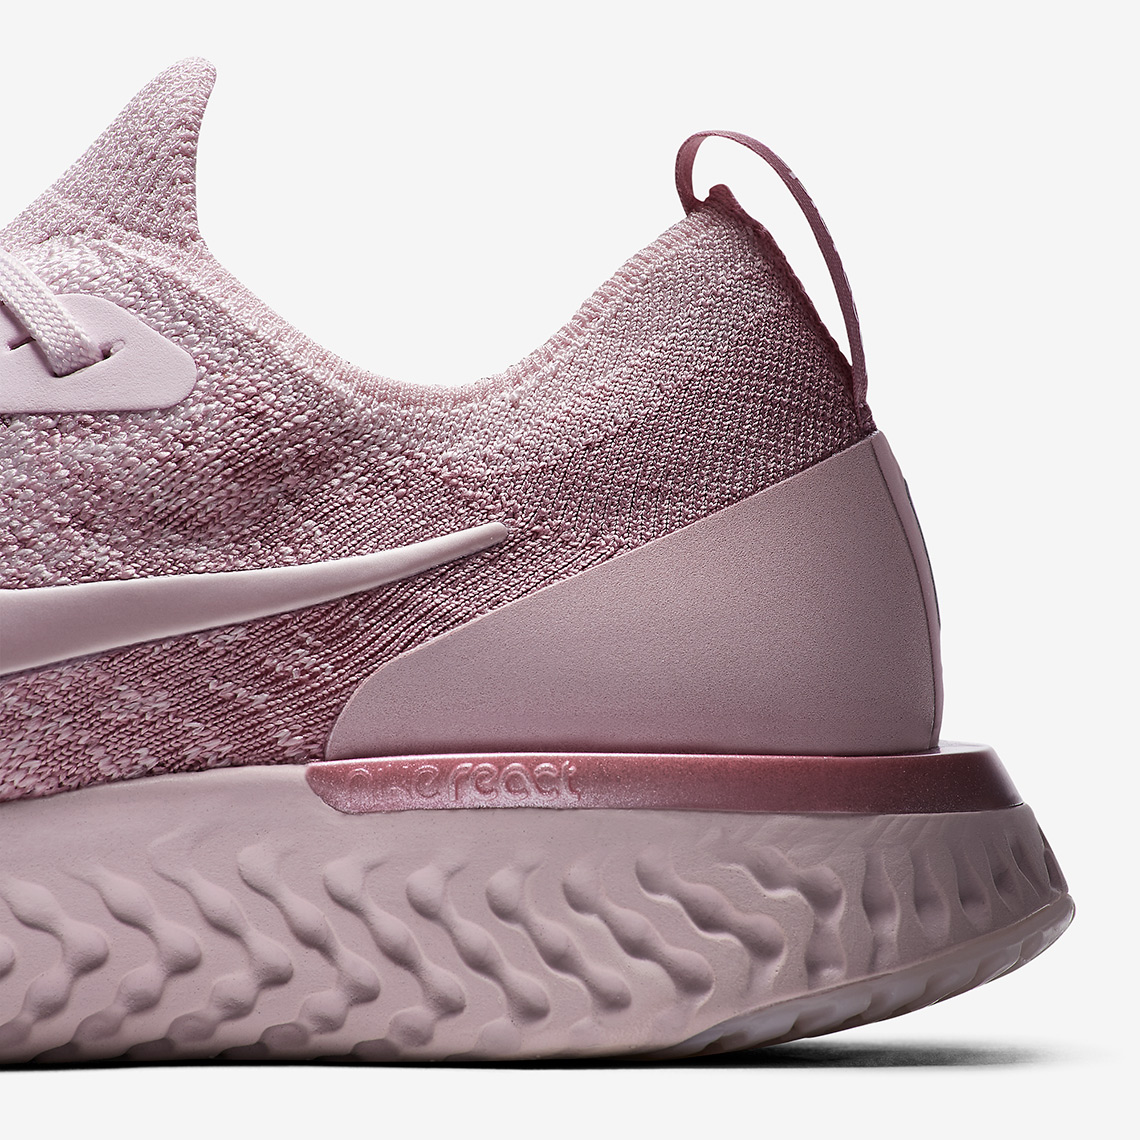 molestarse público No puedo Nike Epic React Flyknit "Pearl Pink" Release Info | SneakerNews.com